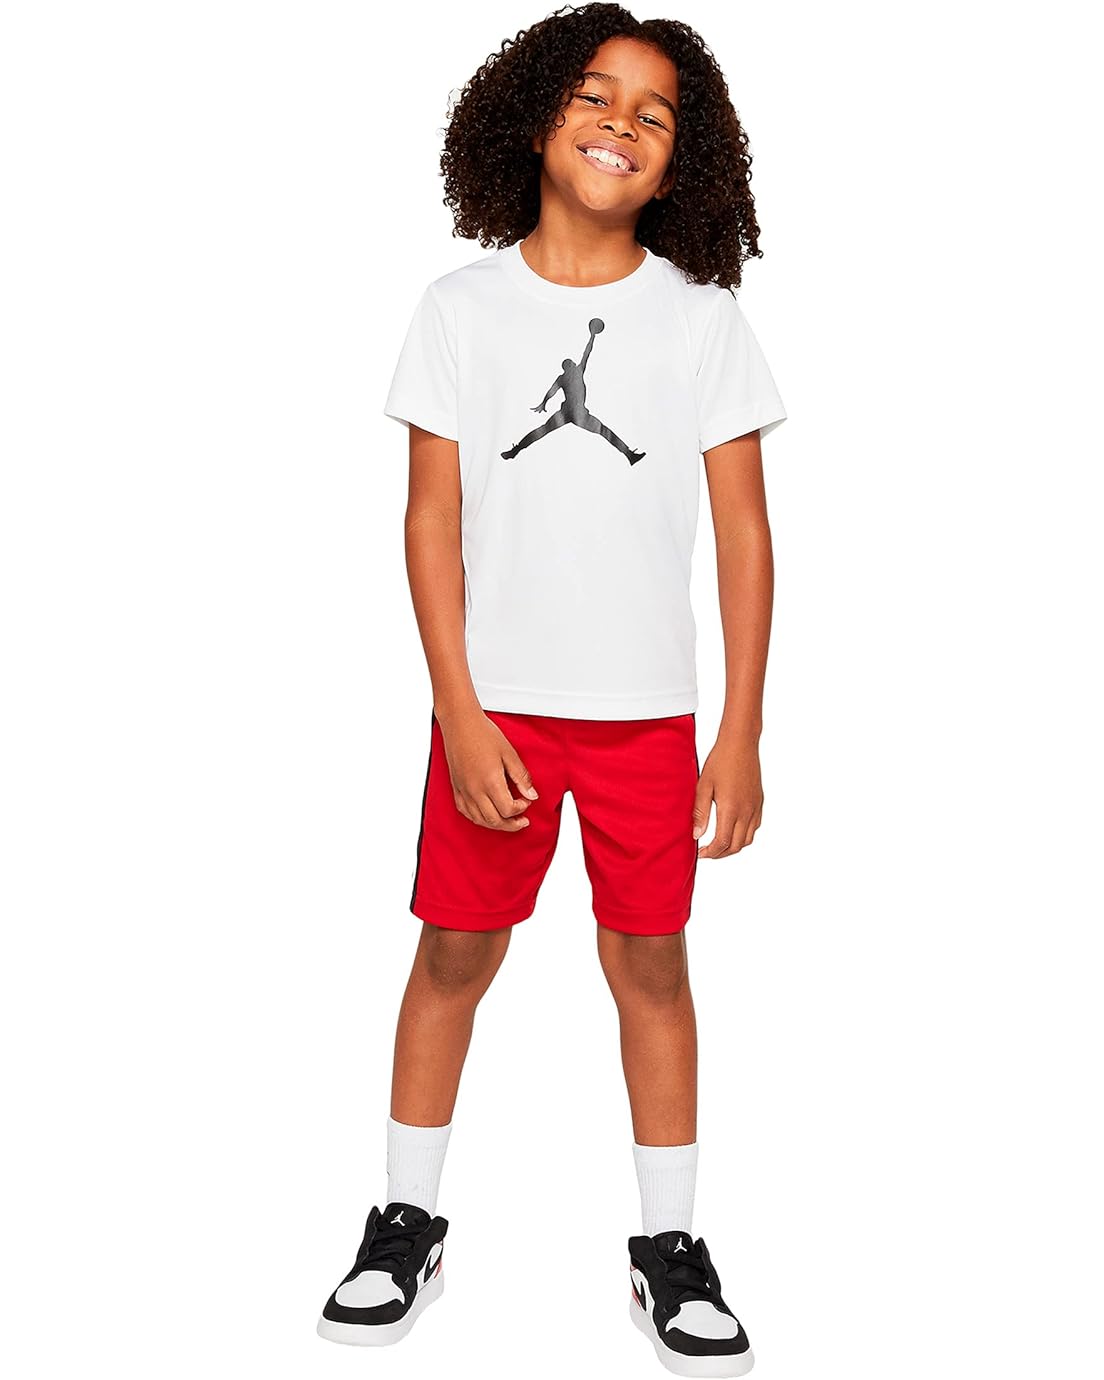  Jordan Kids Jordan Dri-FIT Shorts (Little Kids/Big Kids)